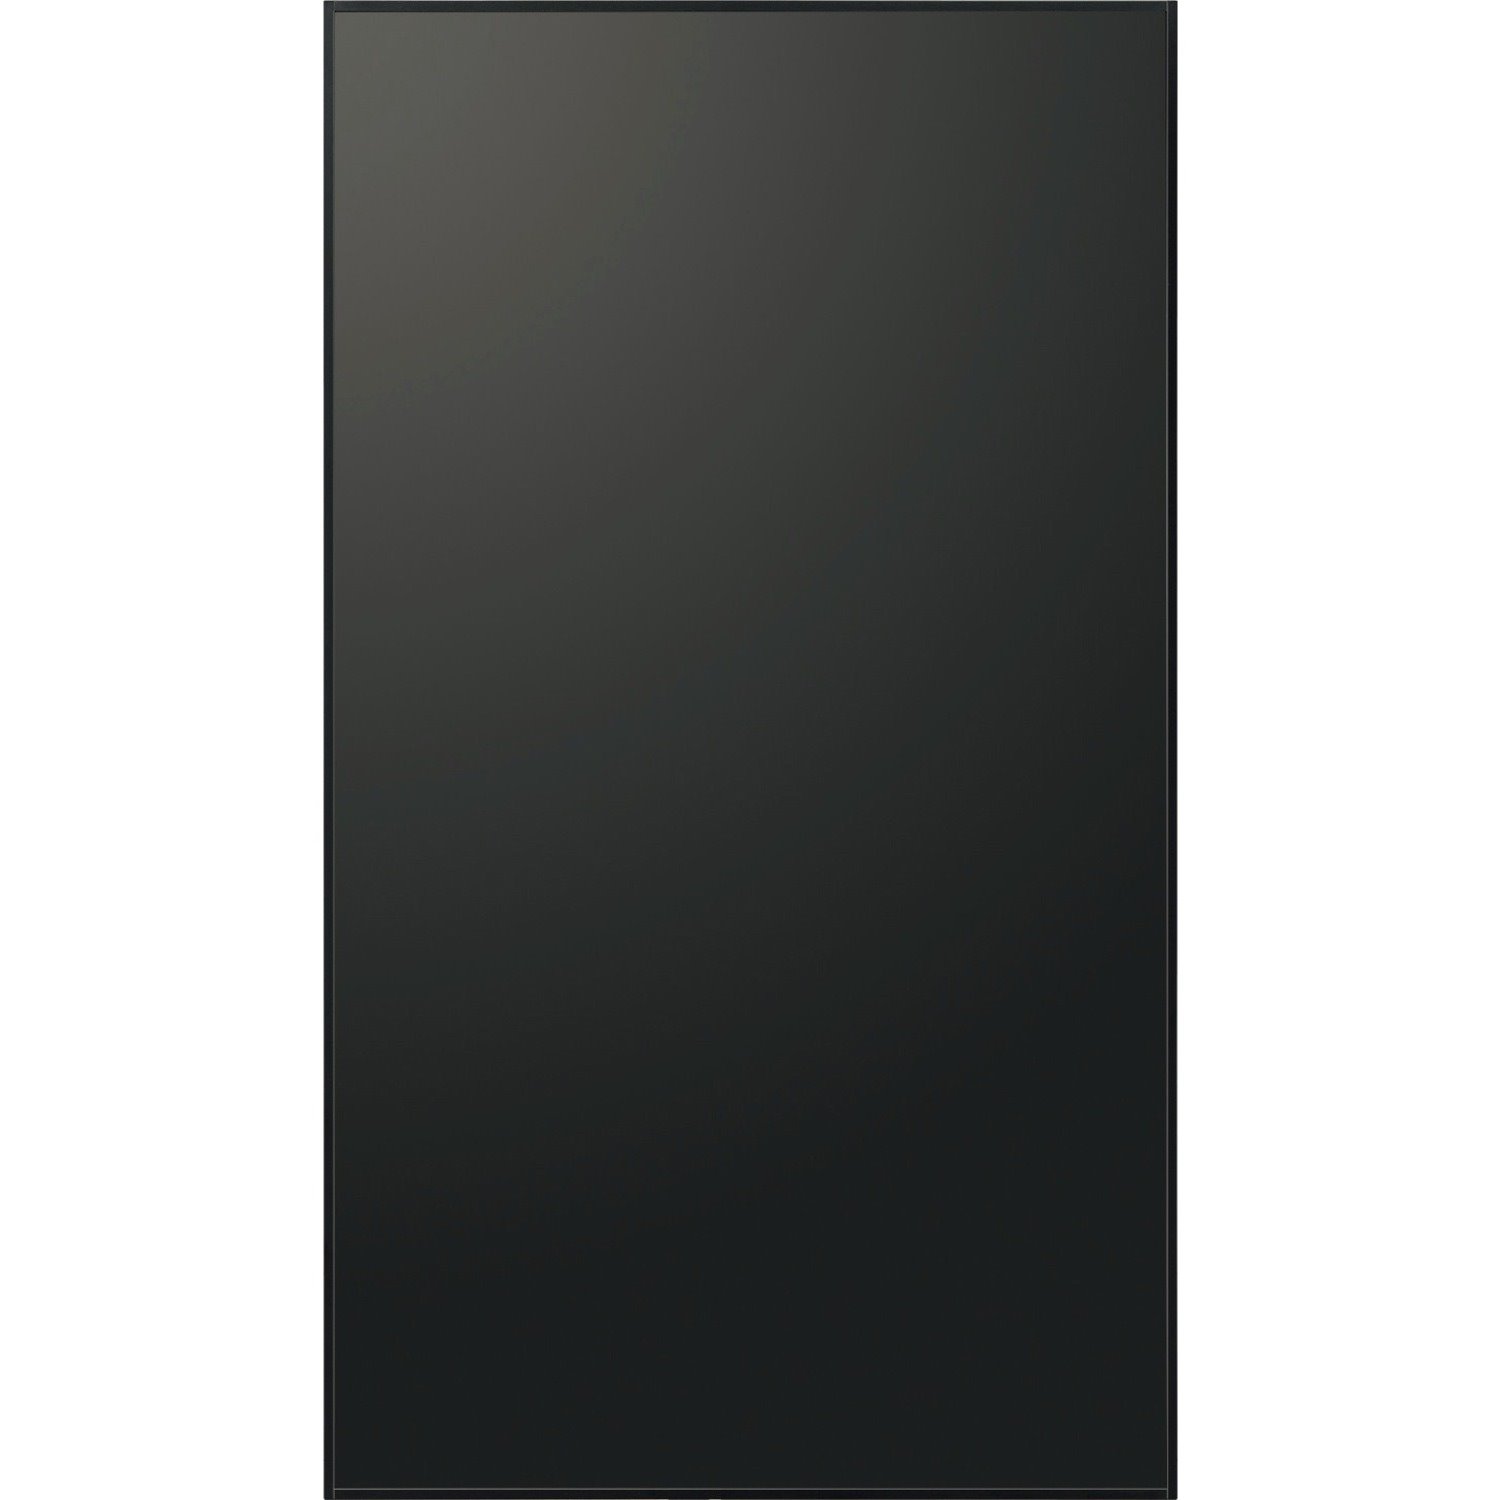 Sharp PN-HM651 Digital Signage Display